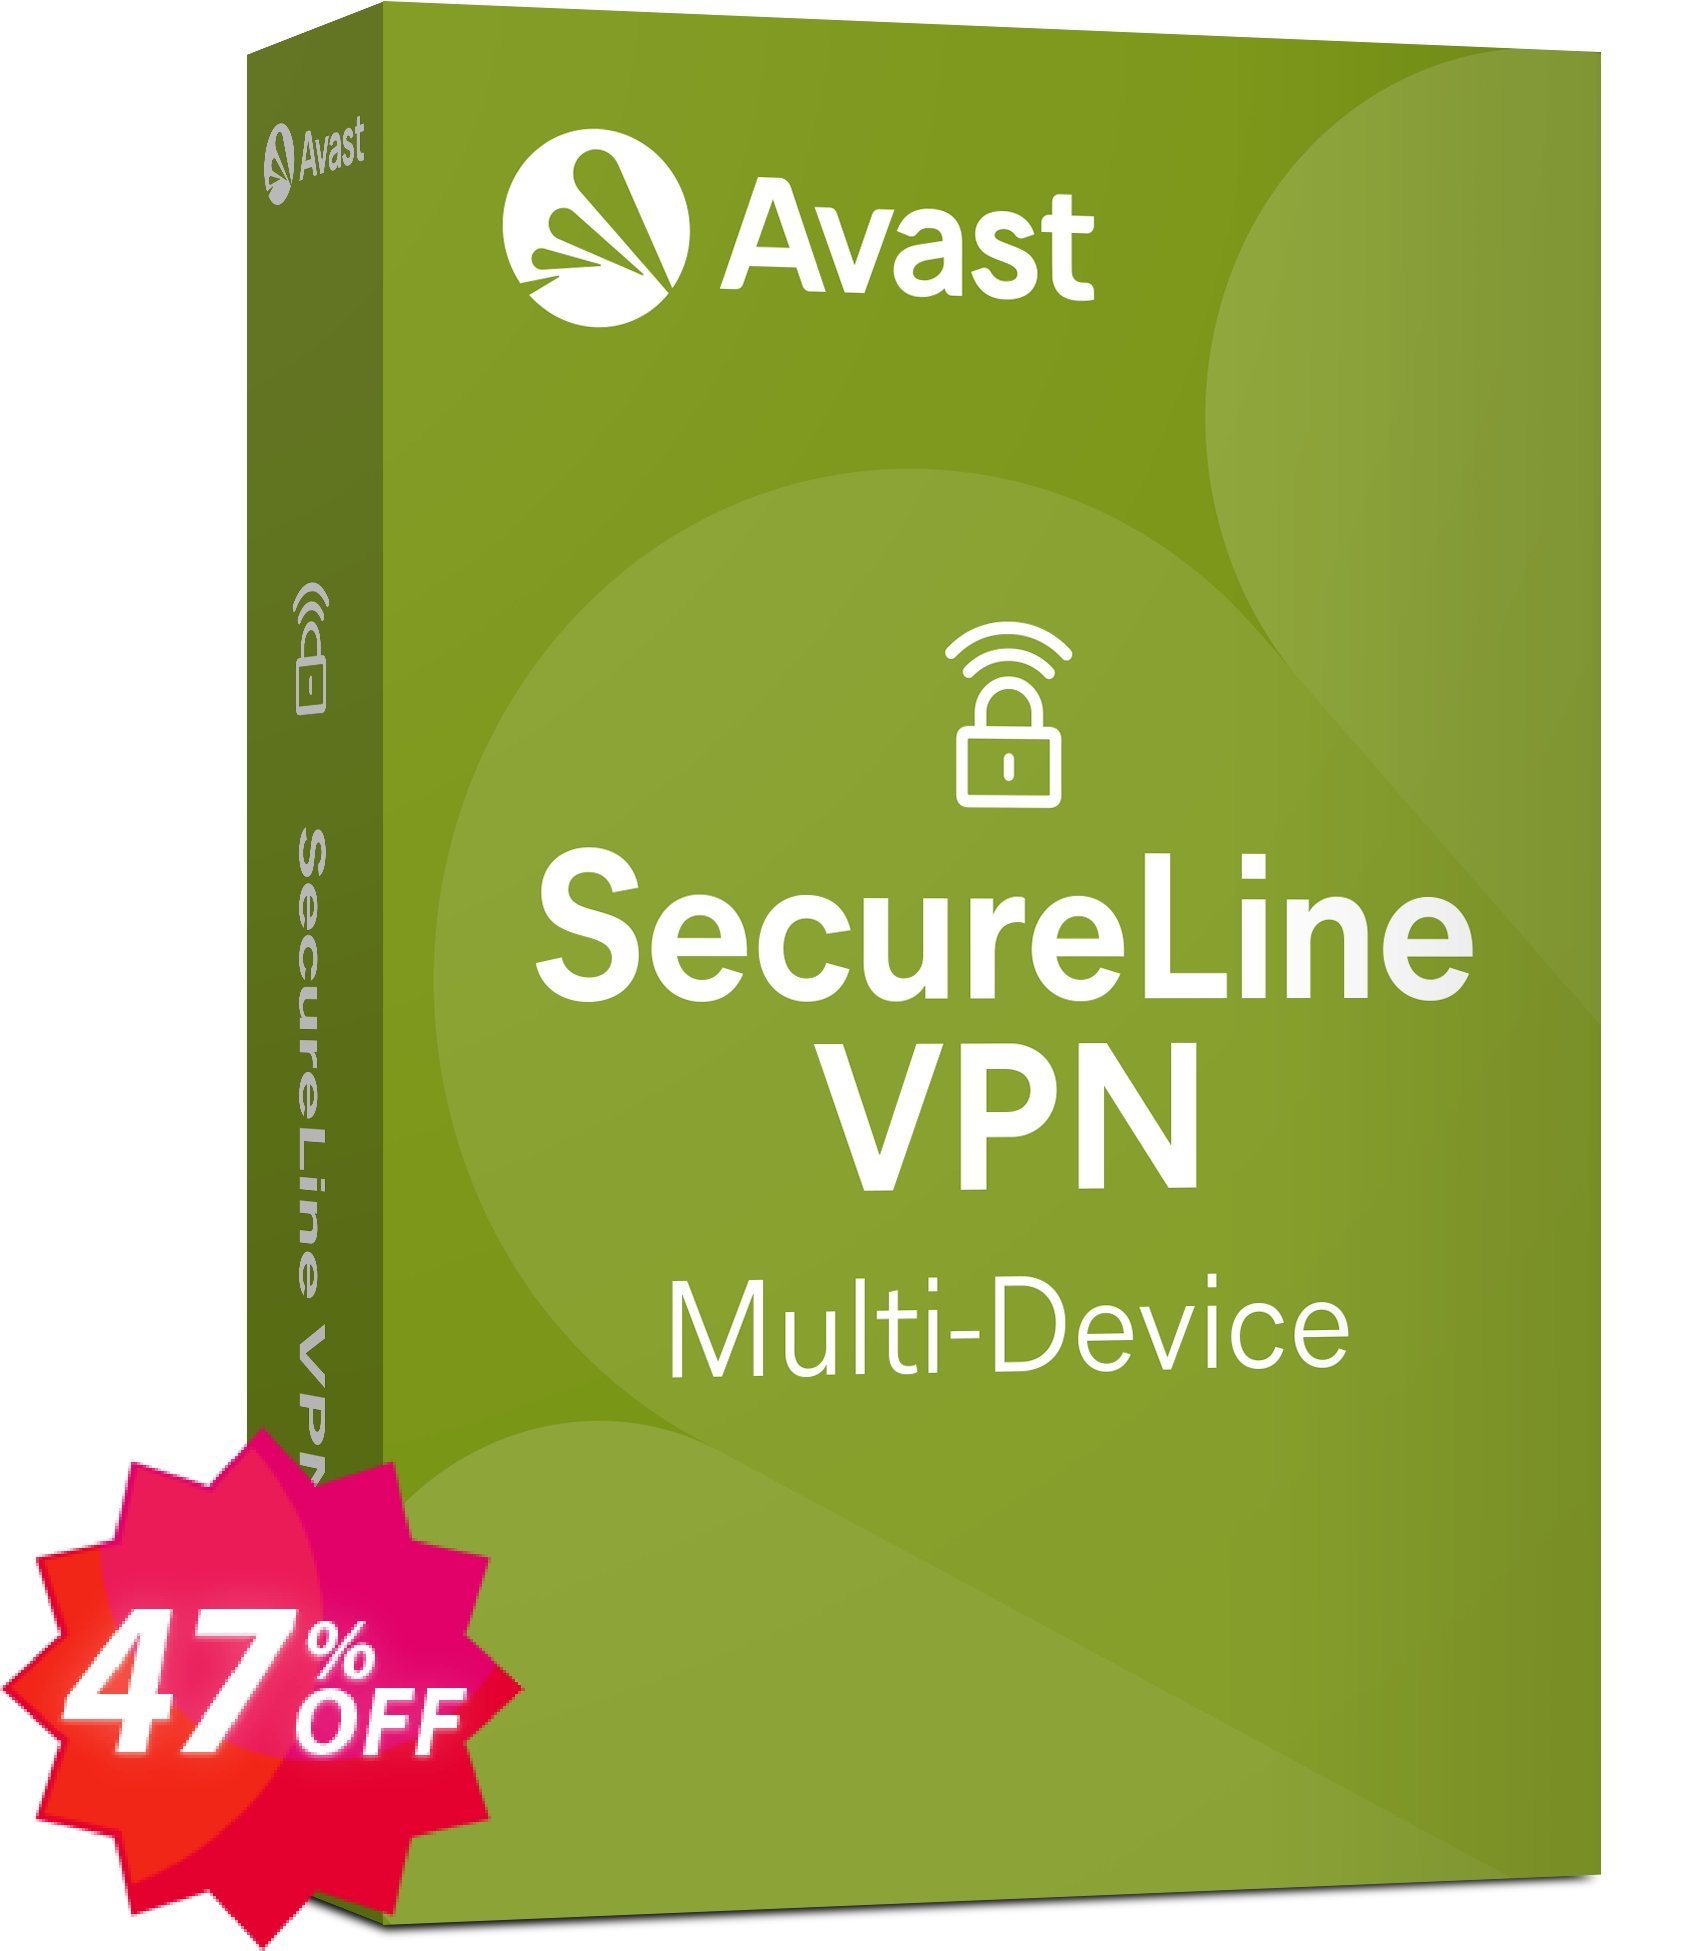 Avast SecureLine VPN, 2 years  Coupon code 47% discount 